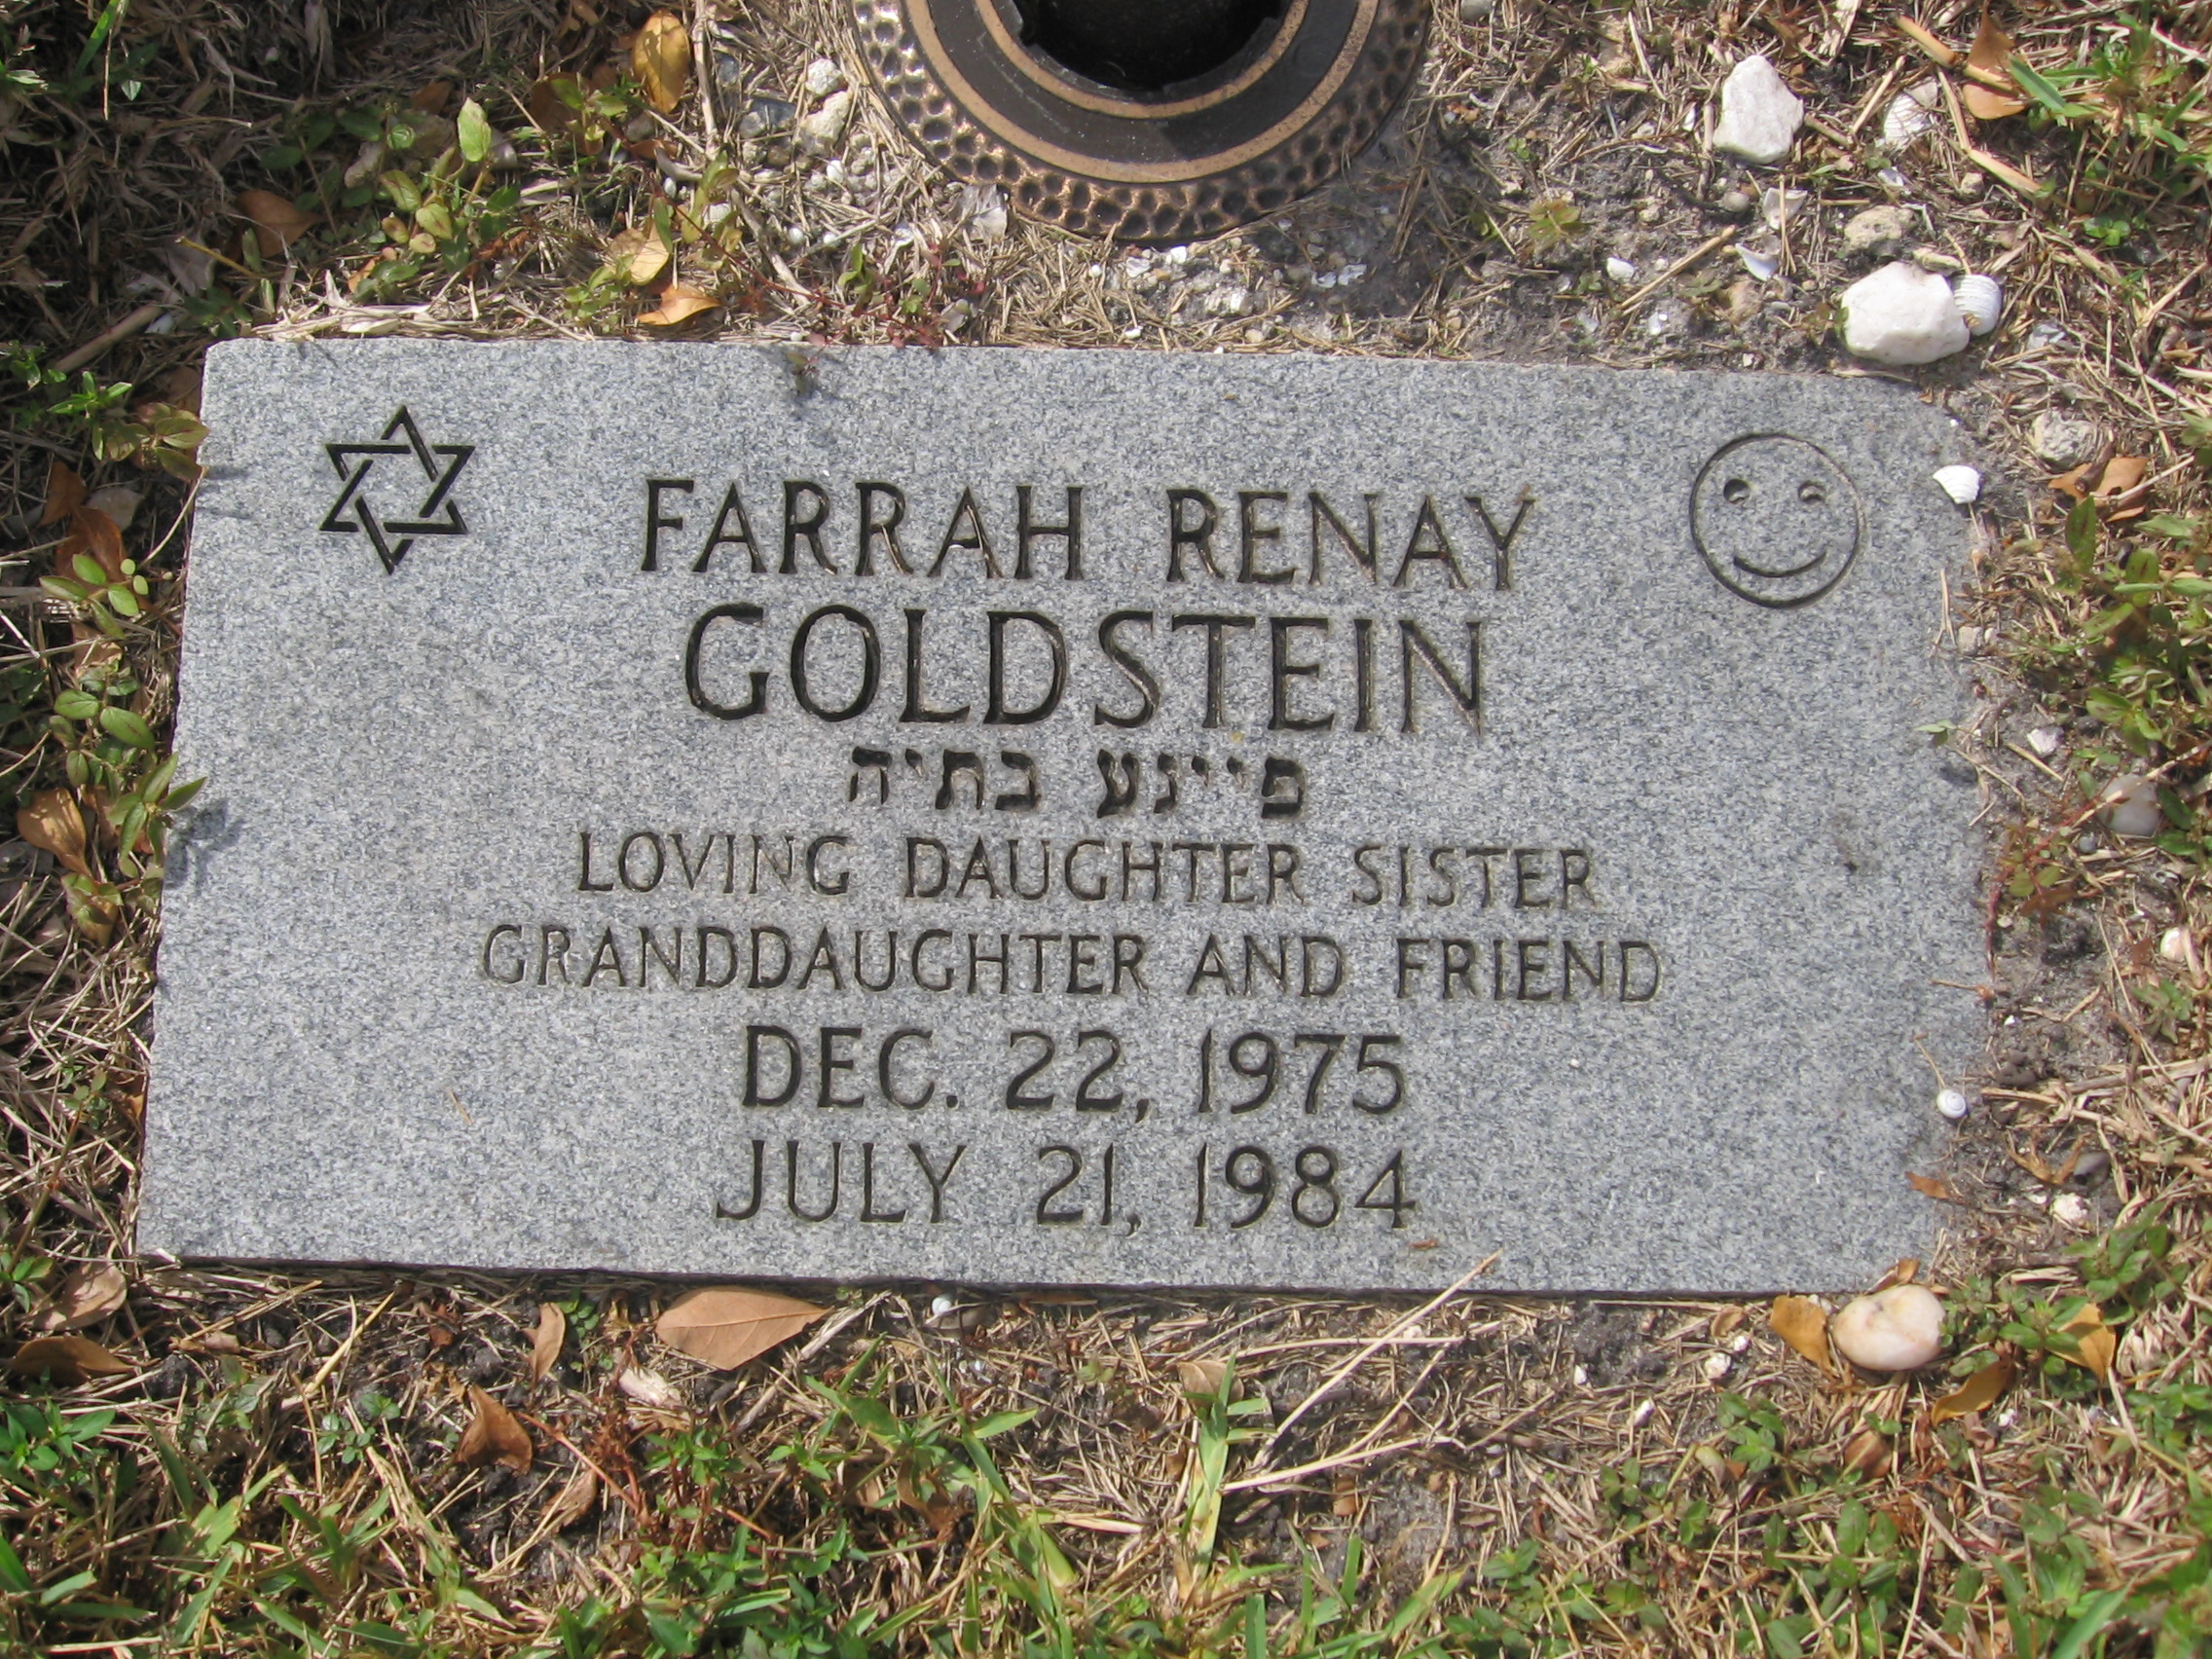 Farrah Renay Goldstein